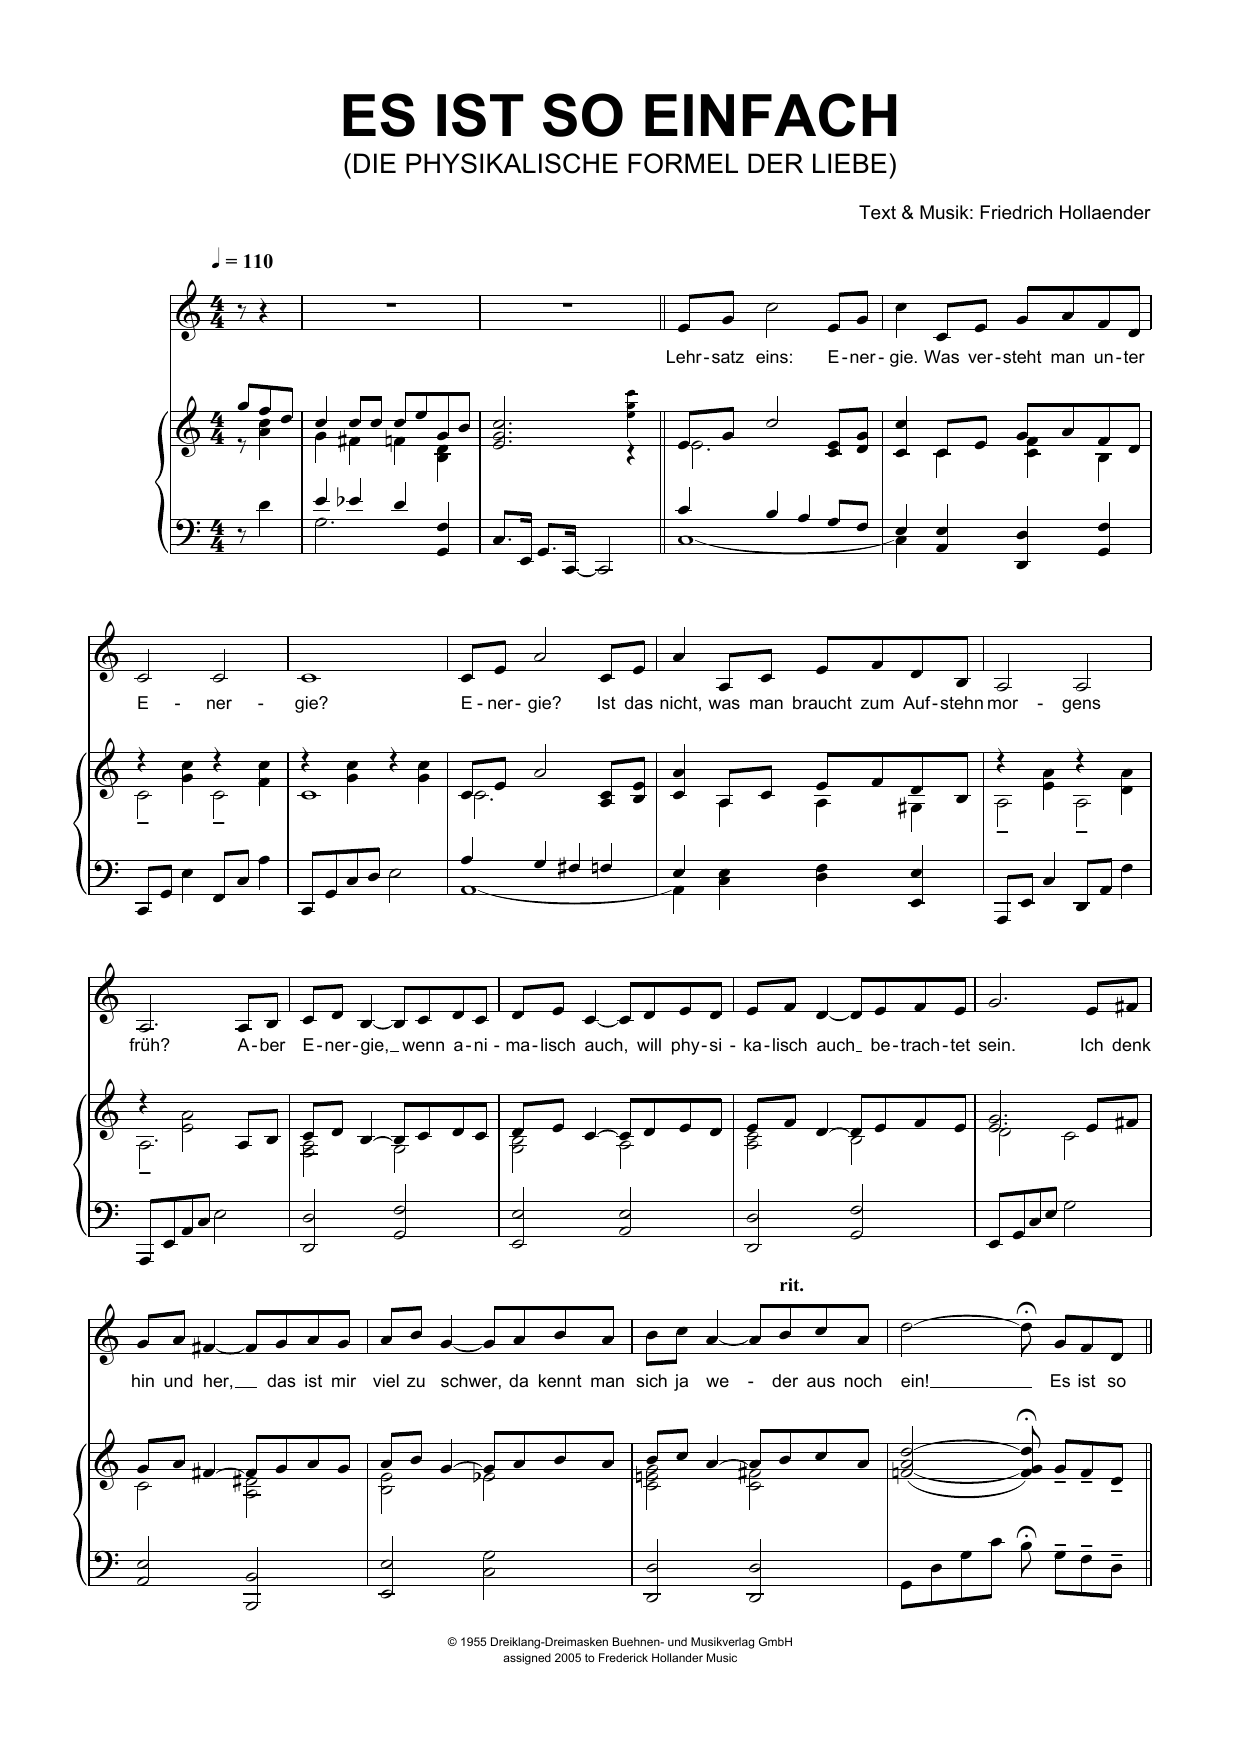 Download Friedrich Hollaender Es Ist So Einfach (Die Physikalische Formel Der Liebe) Sheet Music and learn how to play Piano & Vocal PDF digital score in minutes